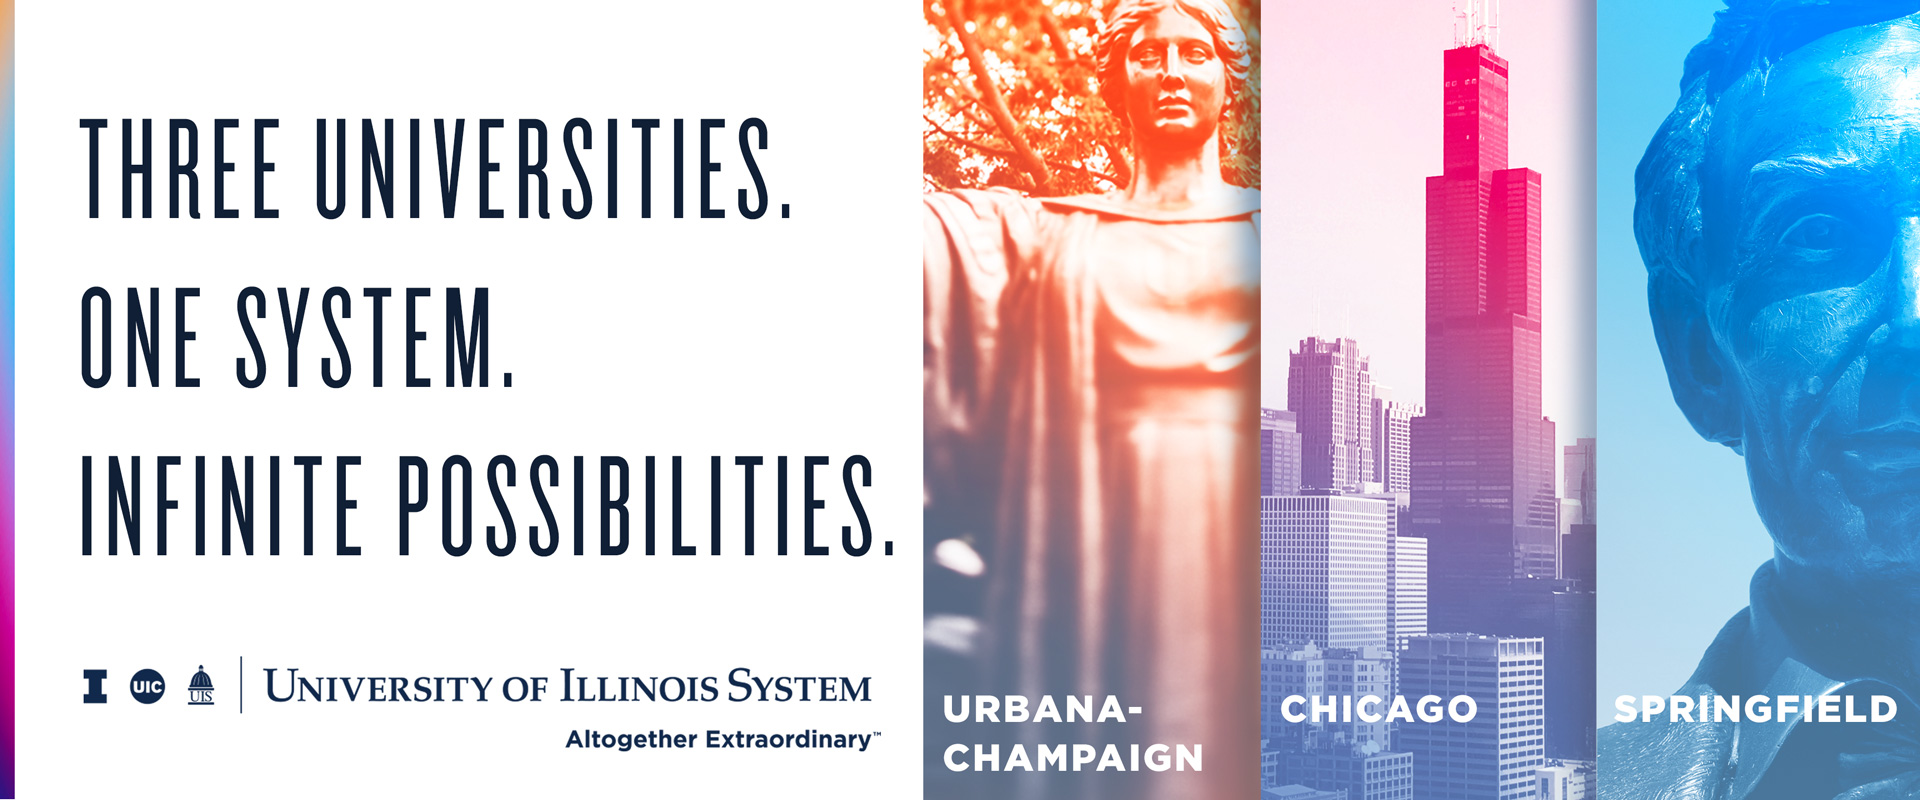 University of Illinois System "Altogether Extraordinary" billboard.